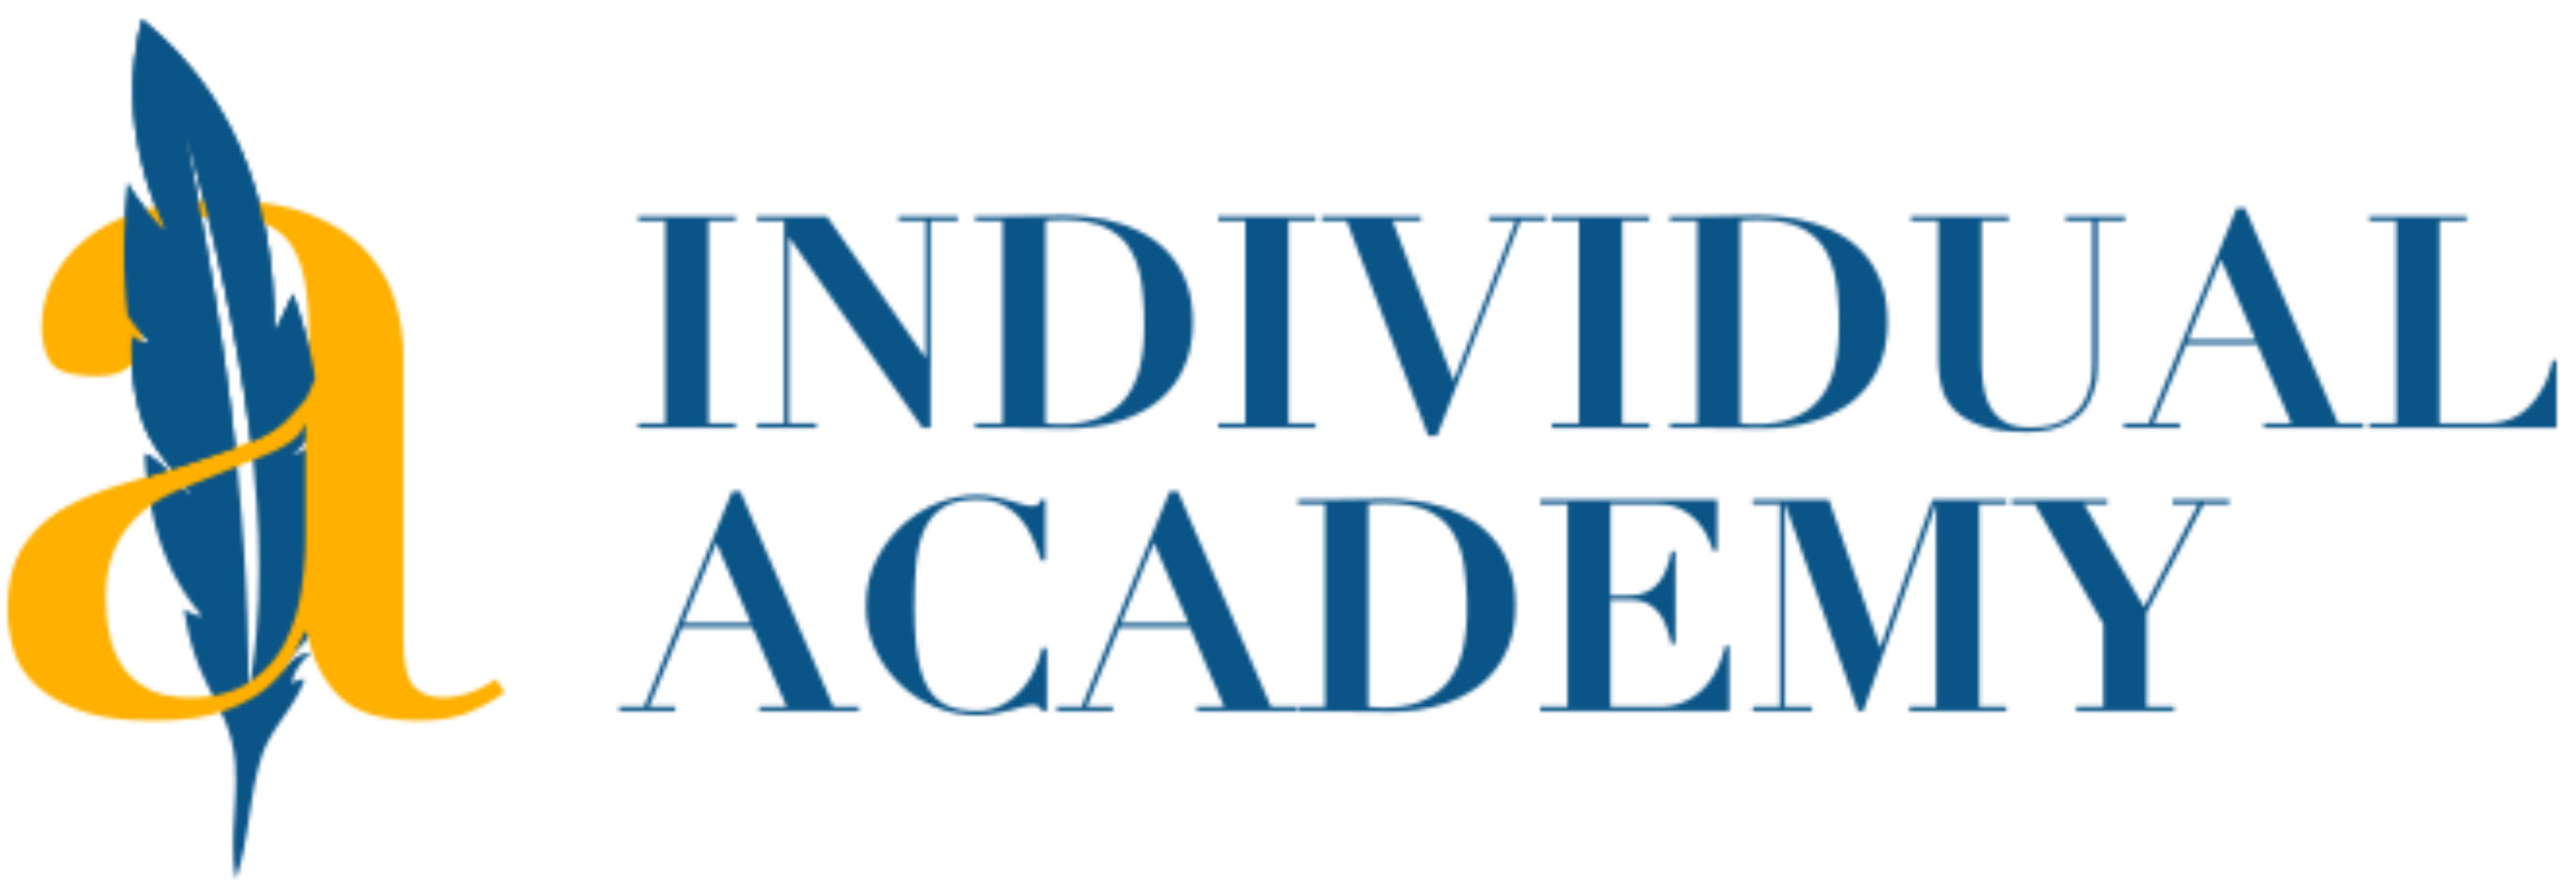 Individual Academy